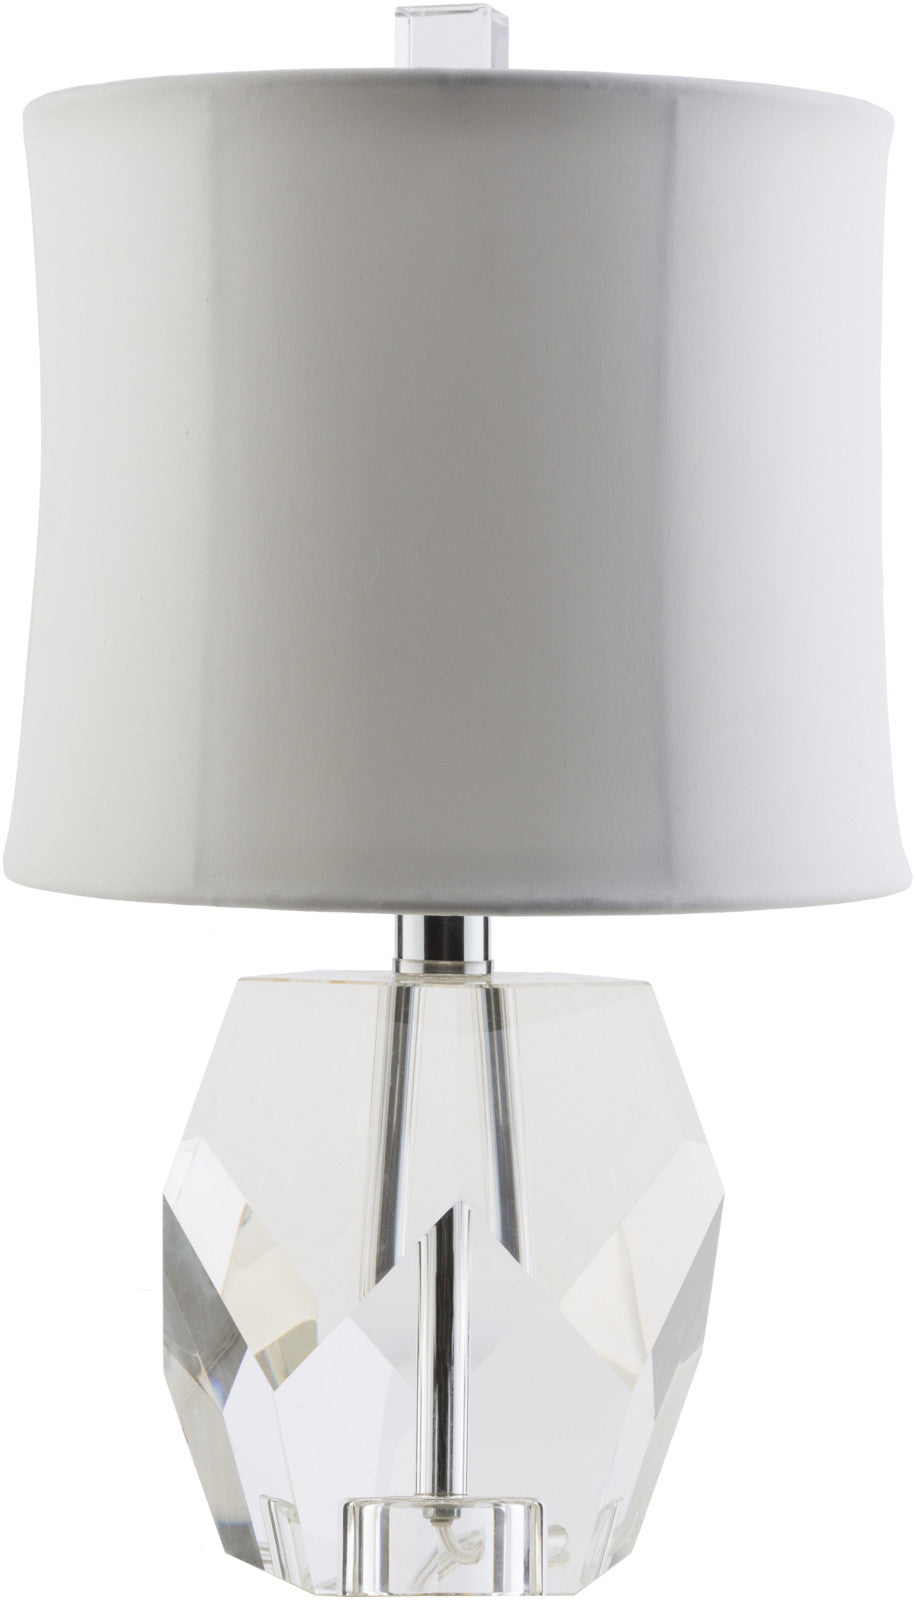 Surya Miramar MRM-630 white Lamp Table Lamp